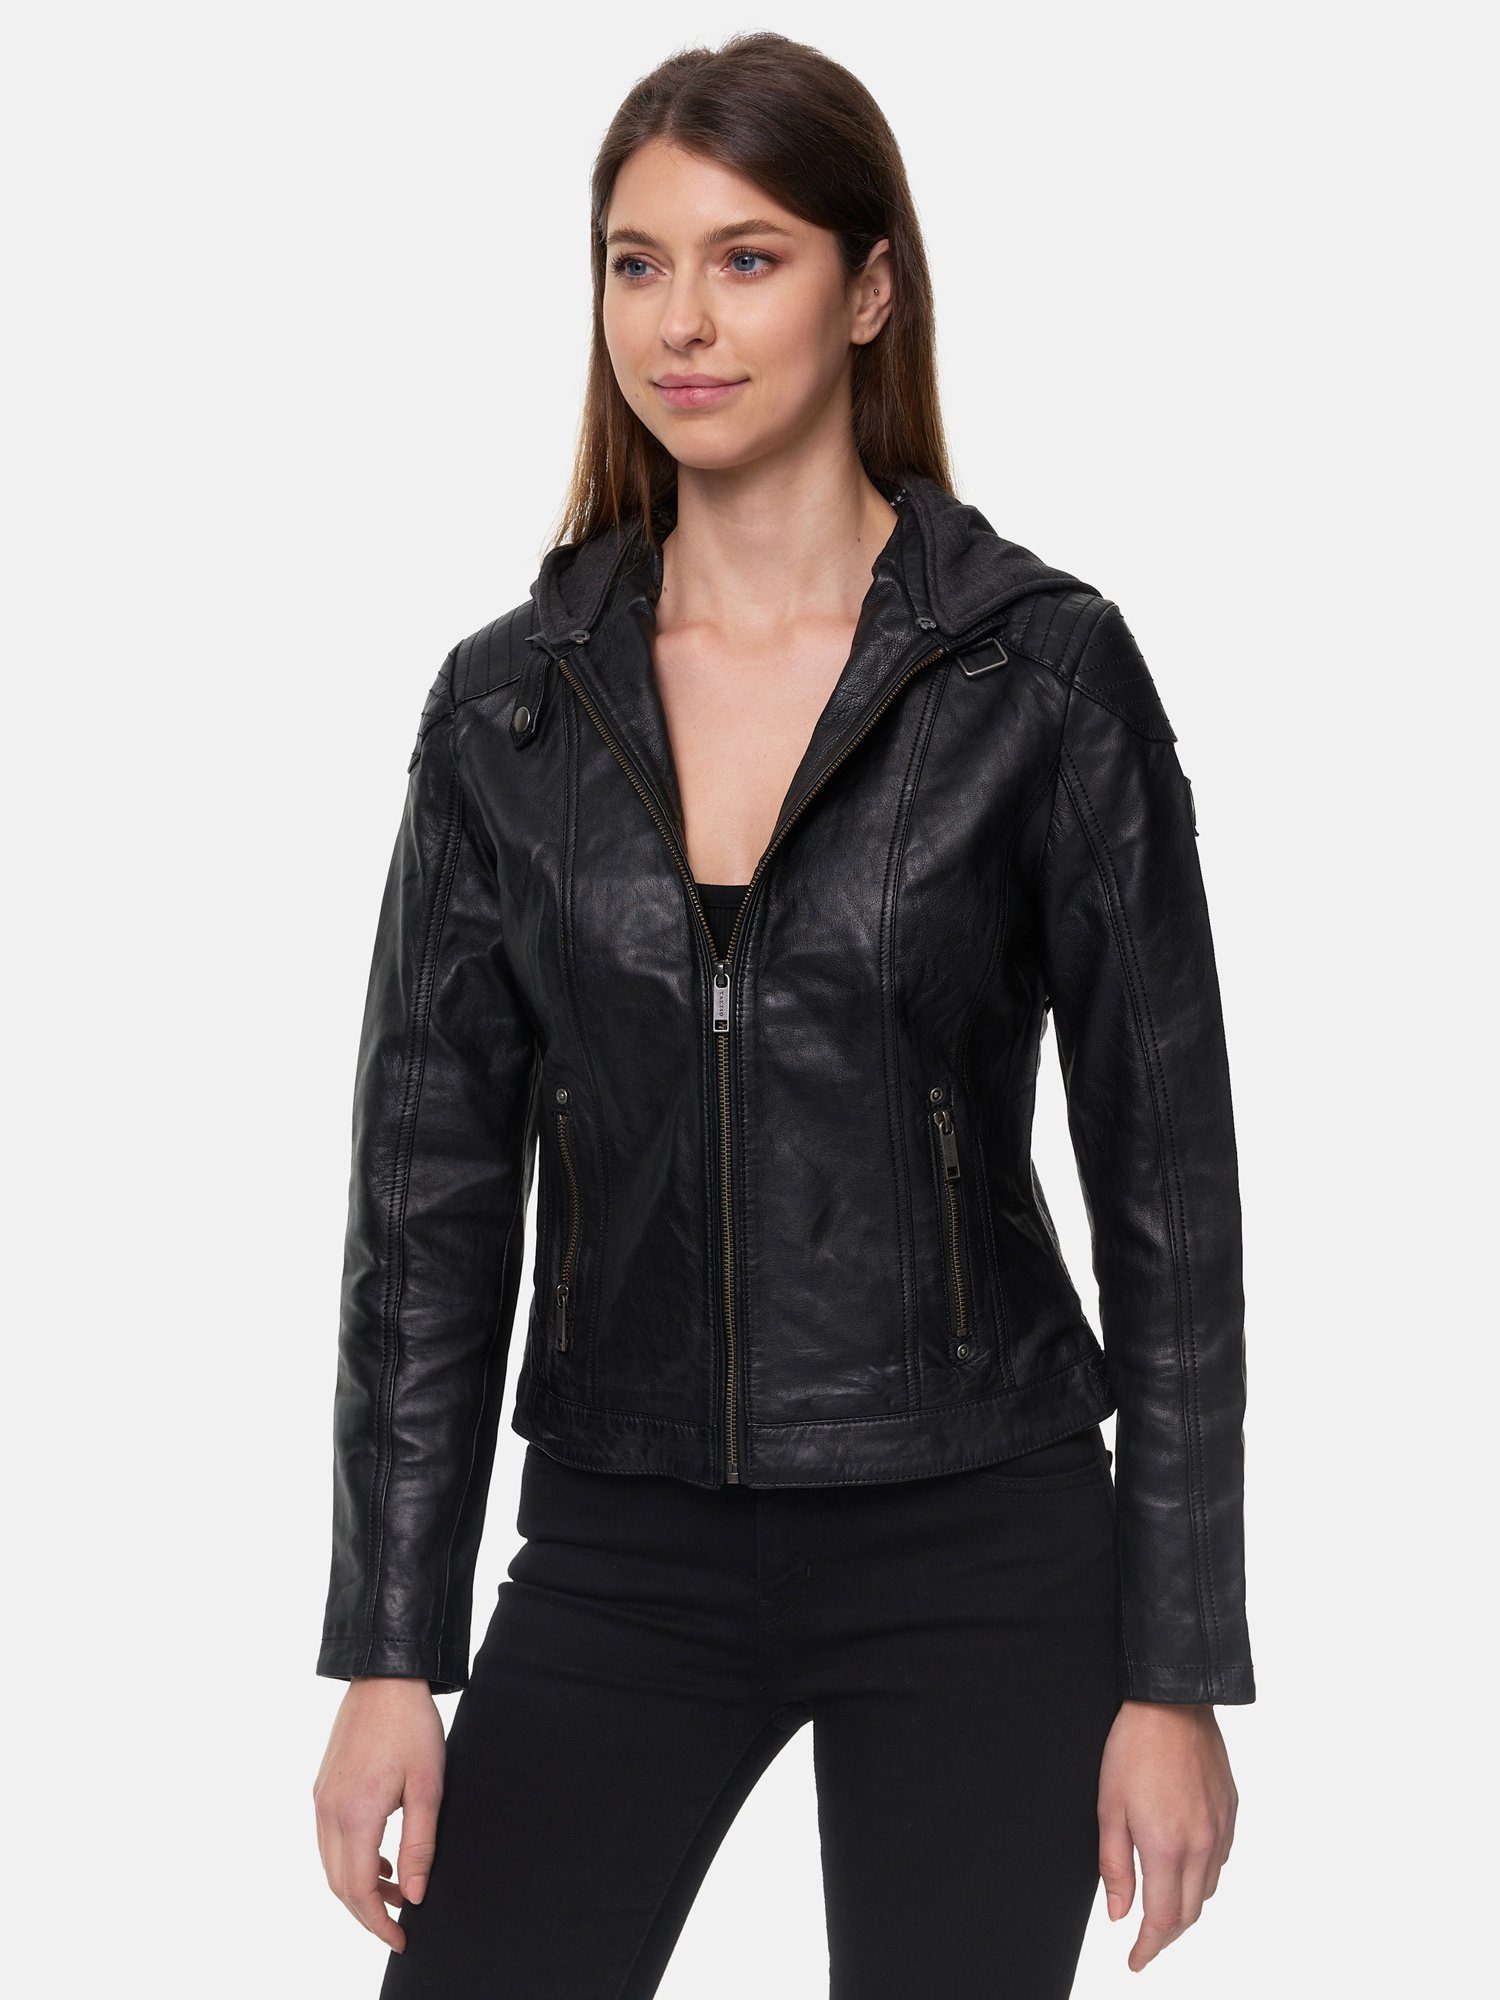 Tazzio Lederjacke F503 Damen Leder Jacke im Biker Look mit abnehmbarer Kapuze schwarz